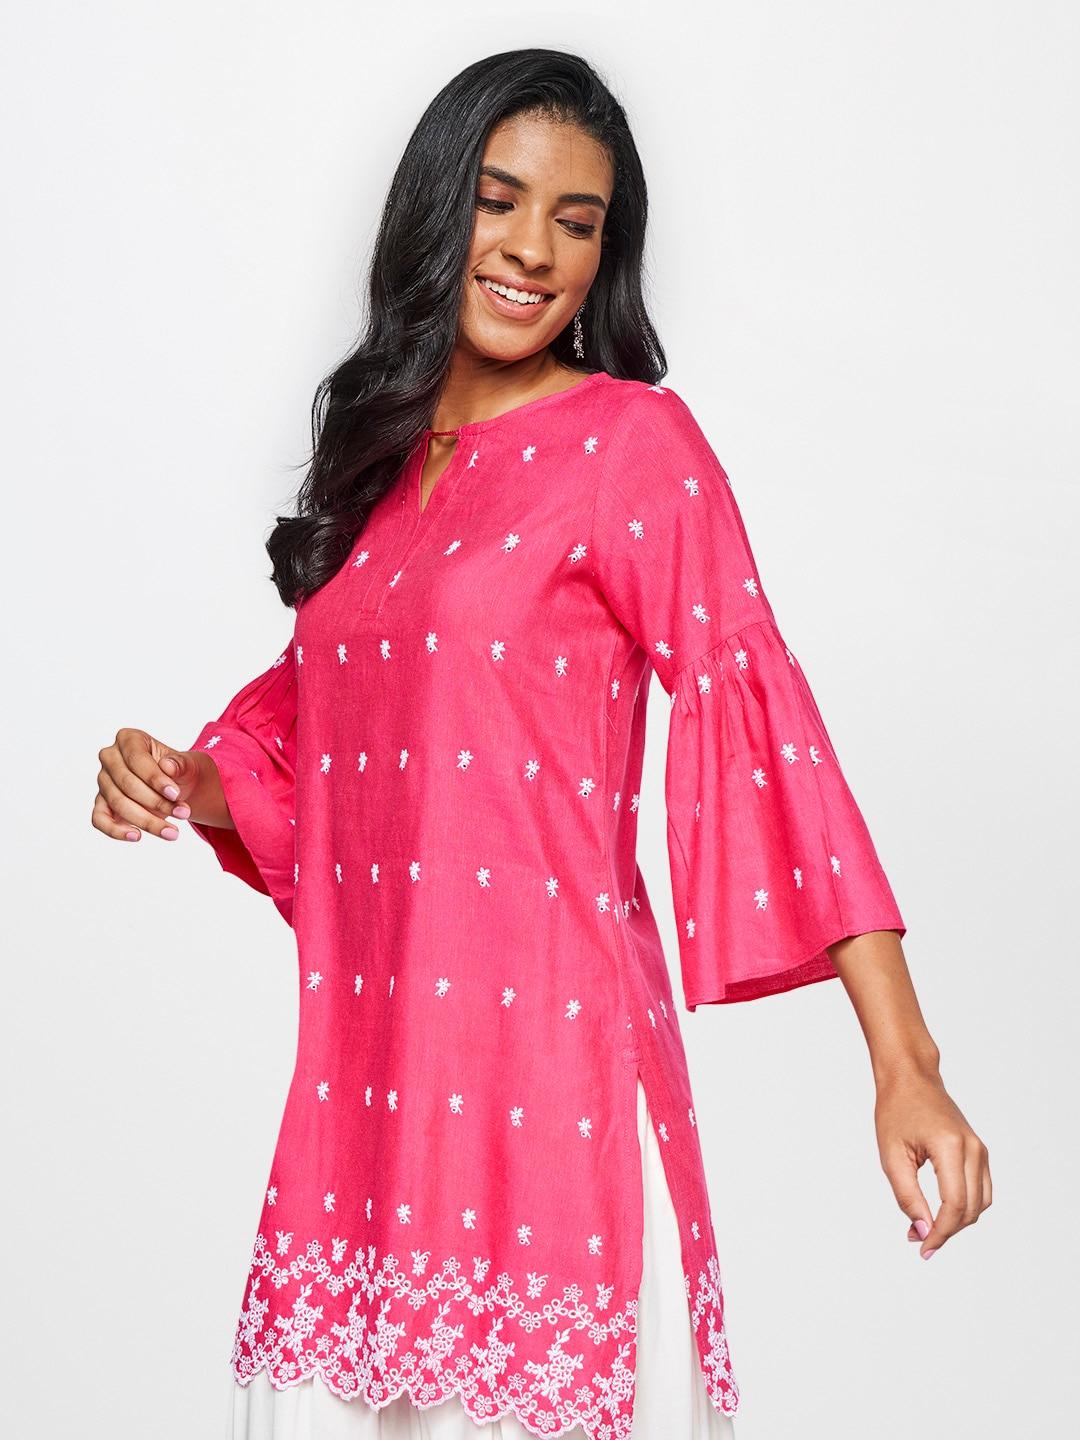 global desi women pink & white ethnic motifs embroidered tunic